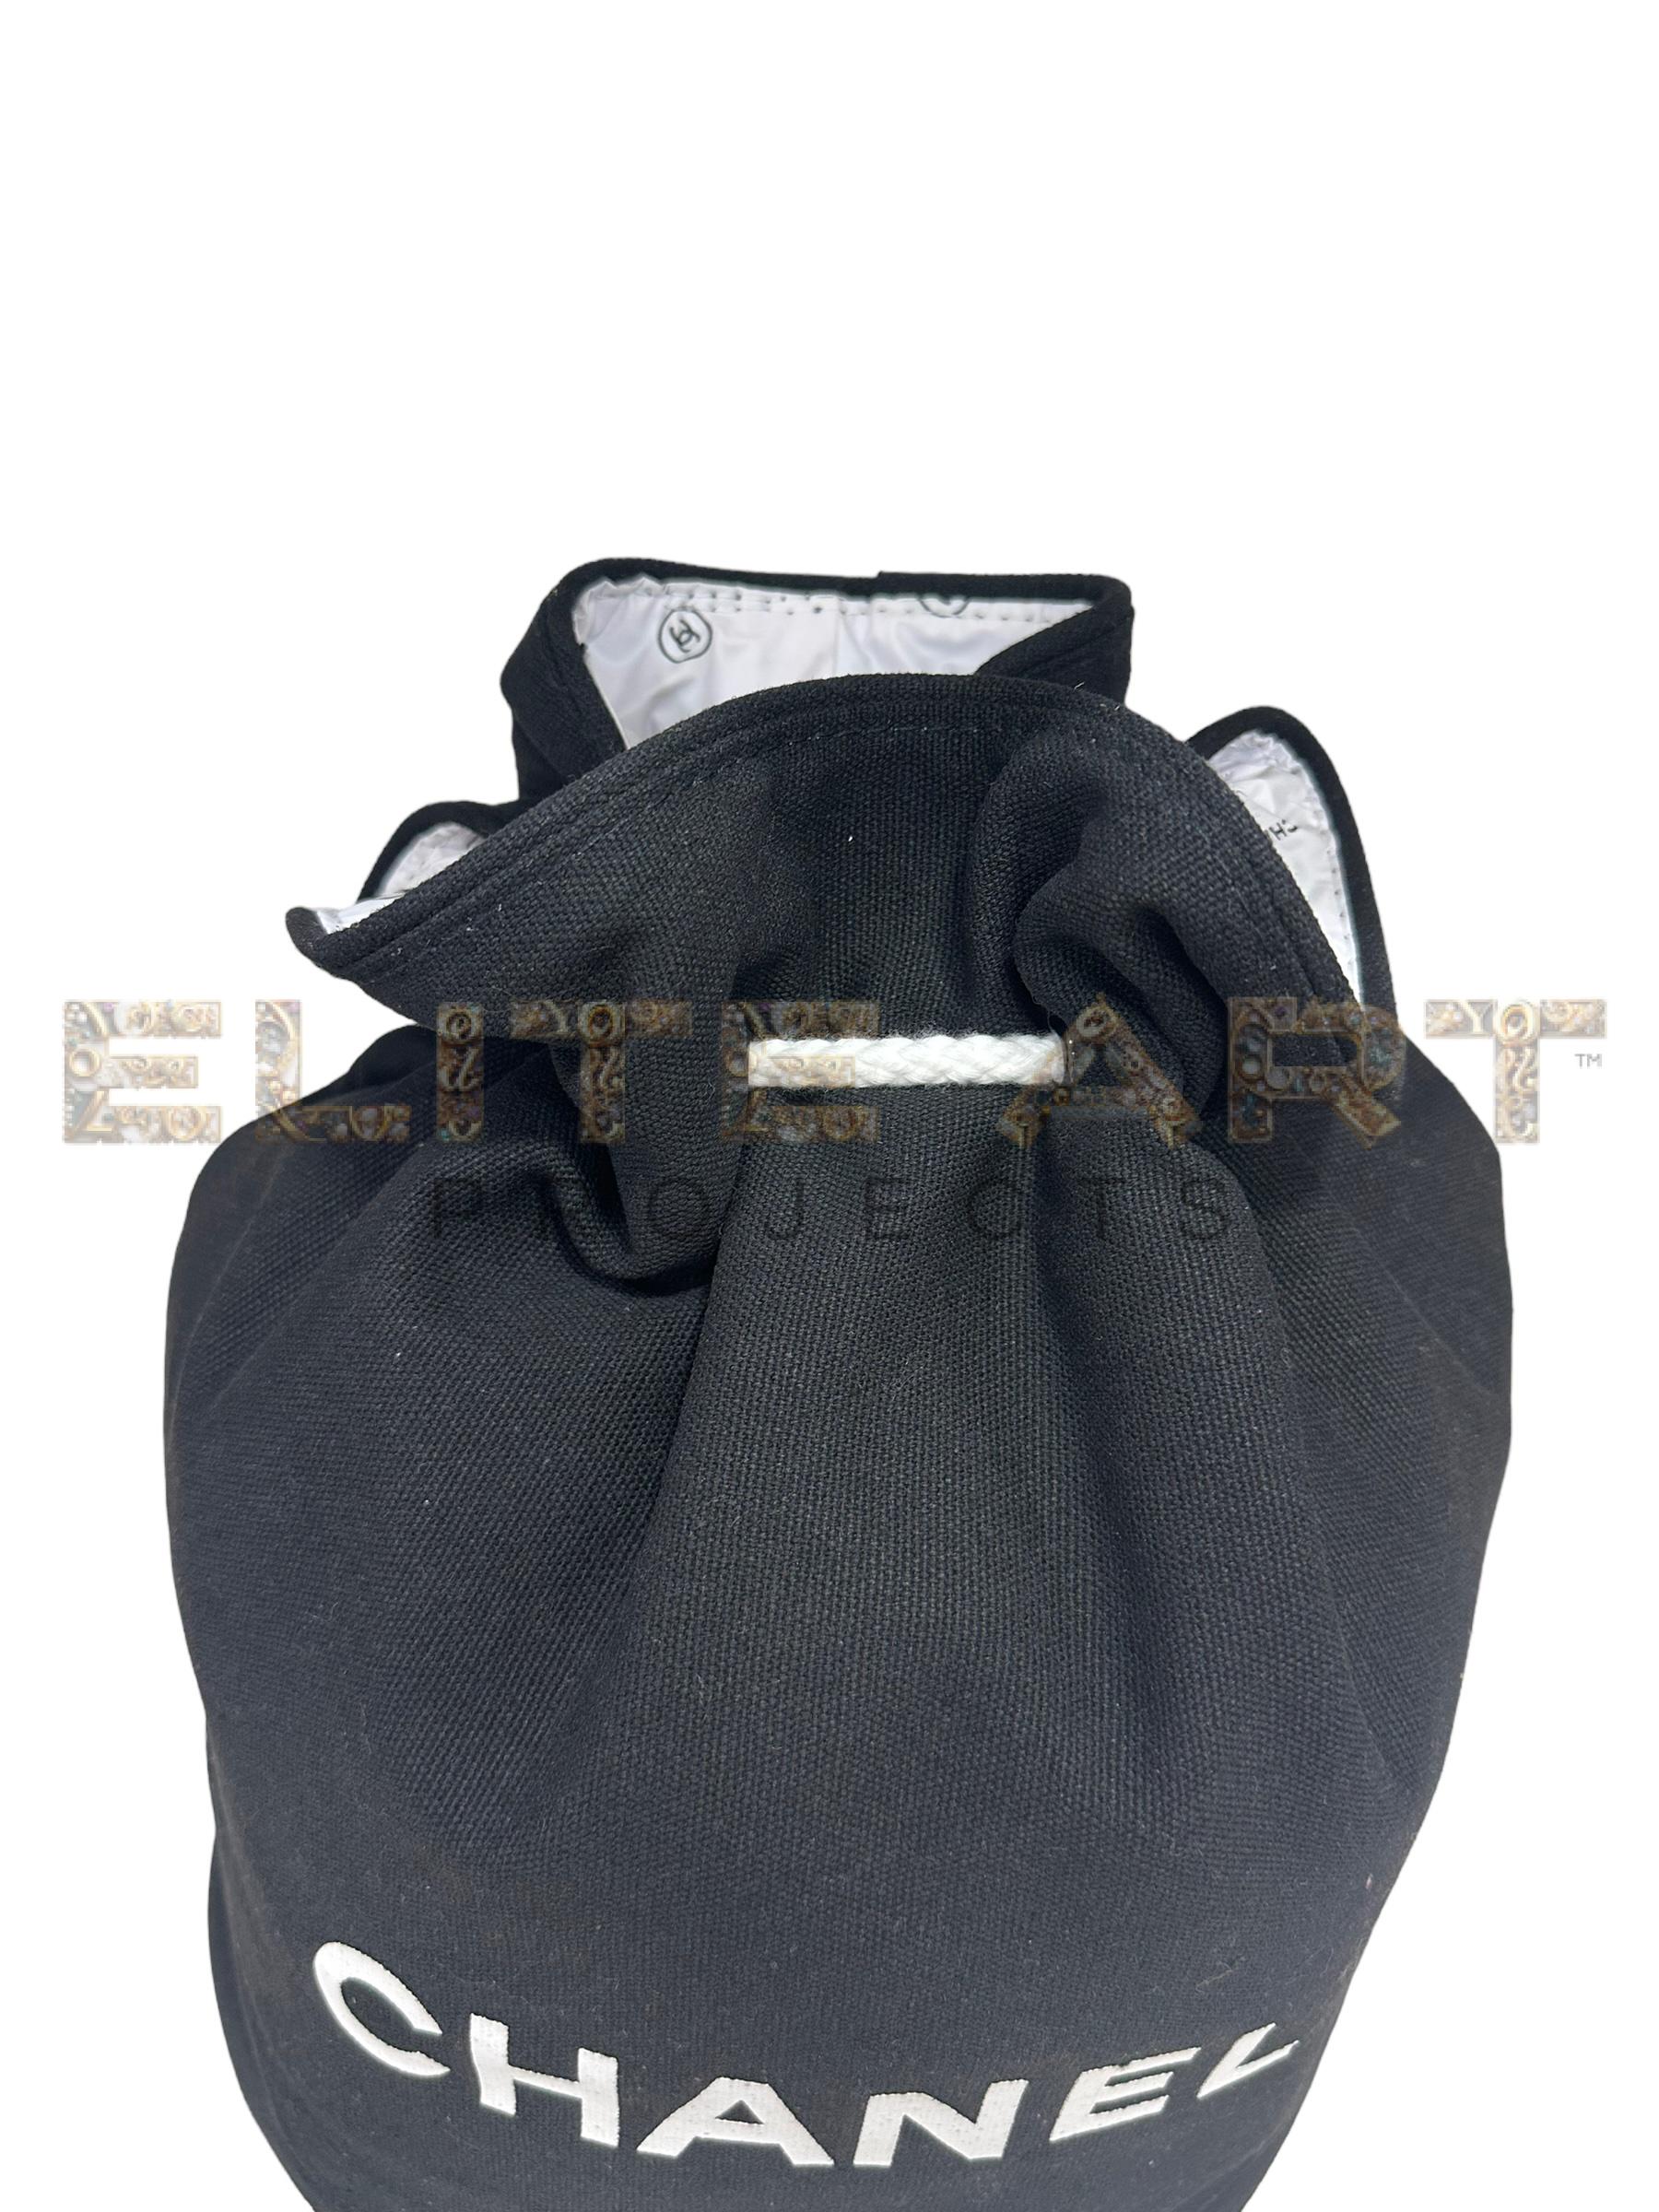 Bucket bag, medium-sized, black canvas, online print, white laces, drawstring closure, waterproof fabric